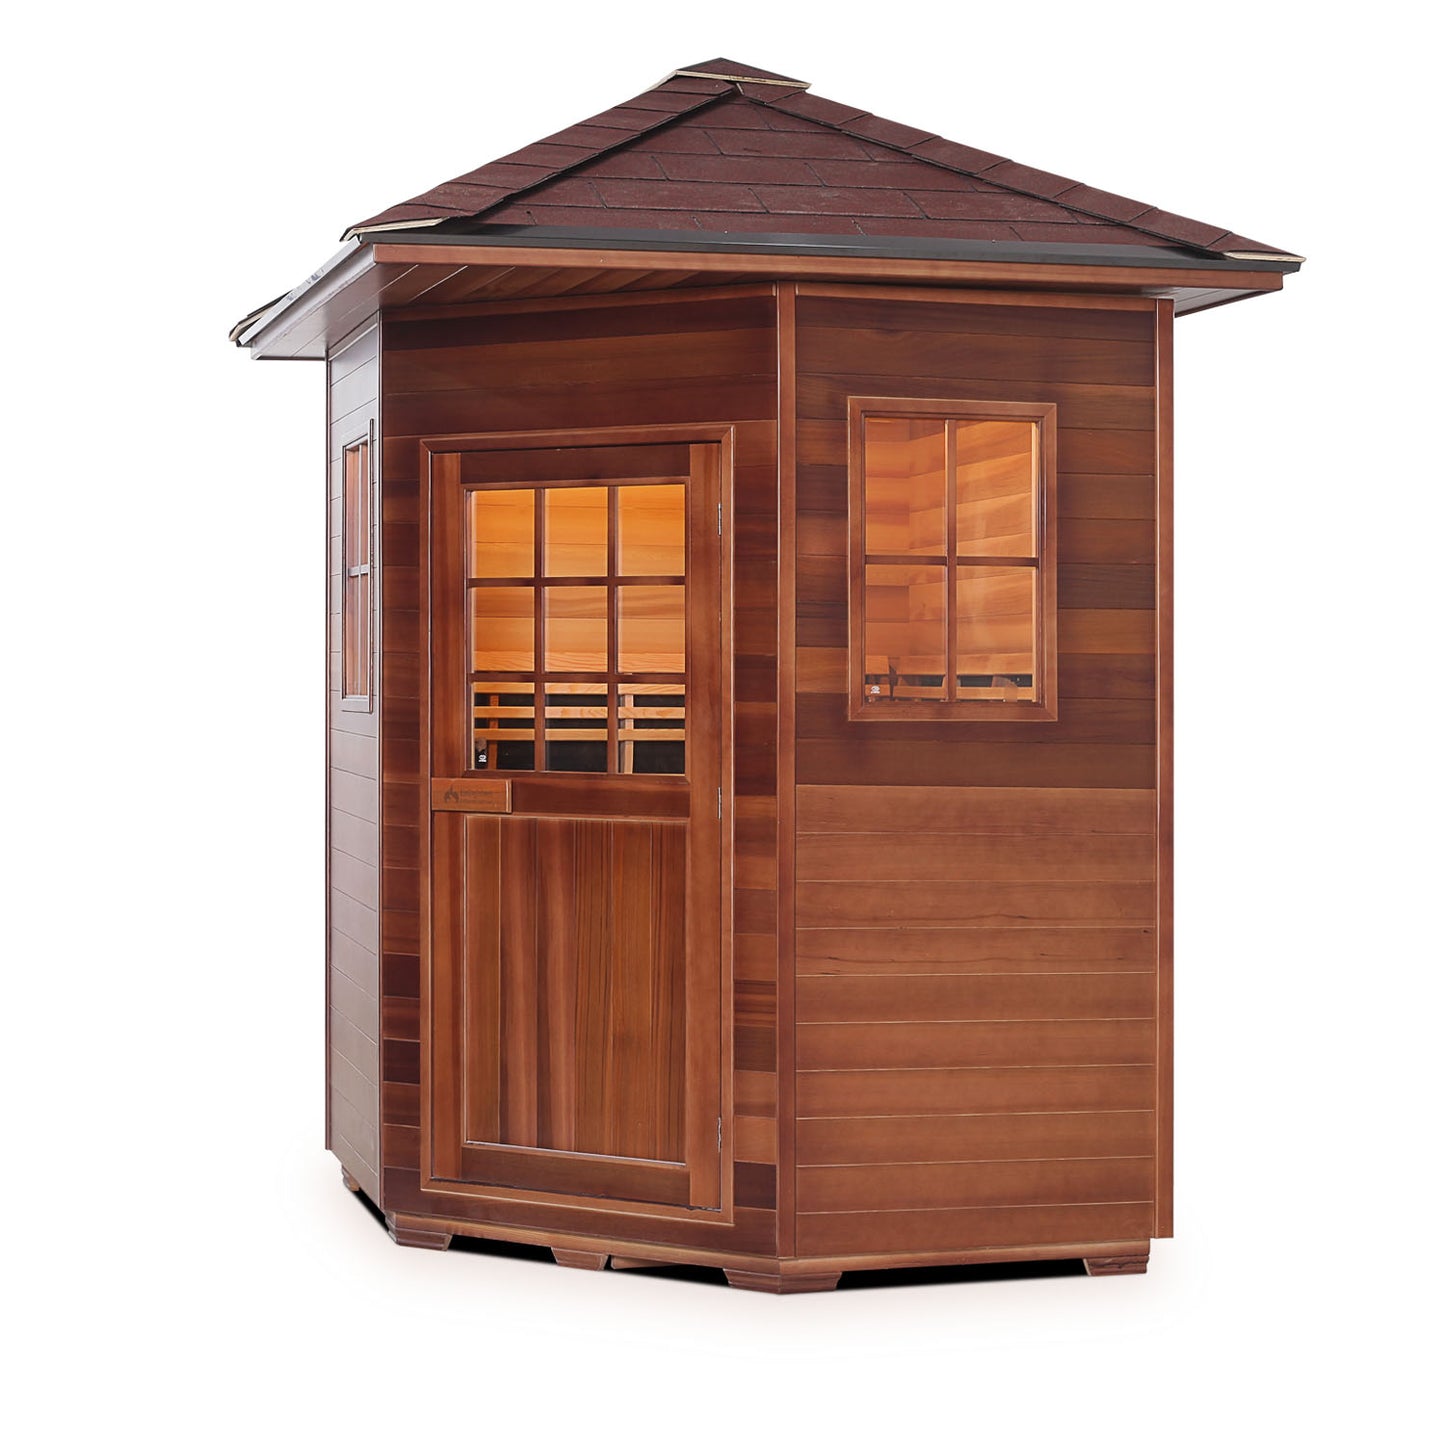 Sapphire C Hybrid Infrared/Traditional Outdoor Sauna